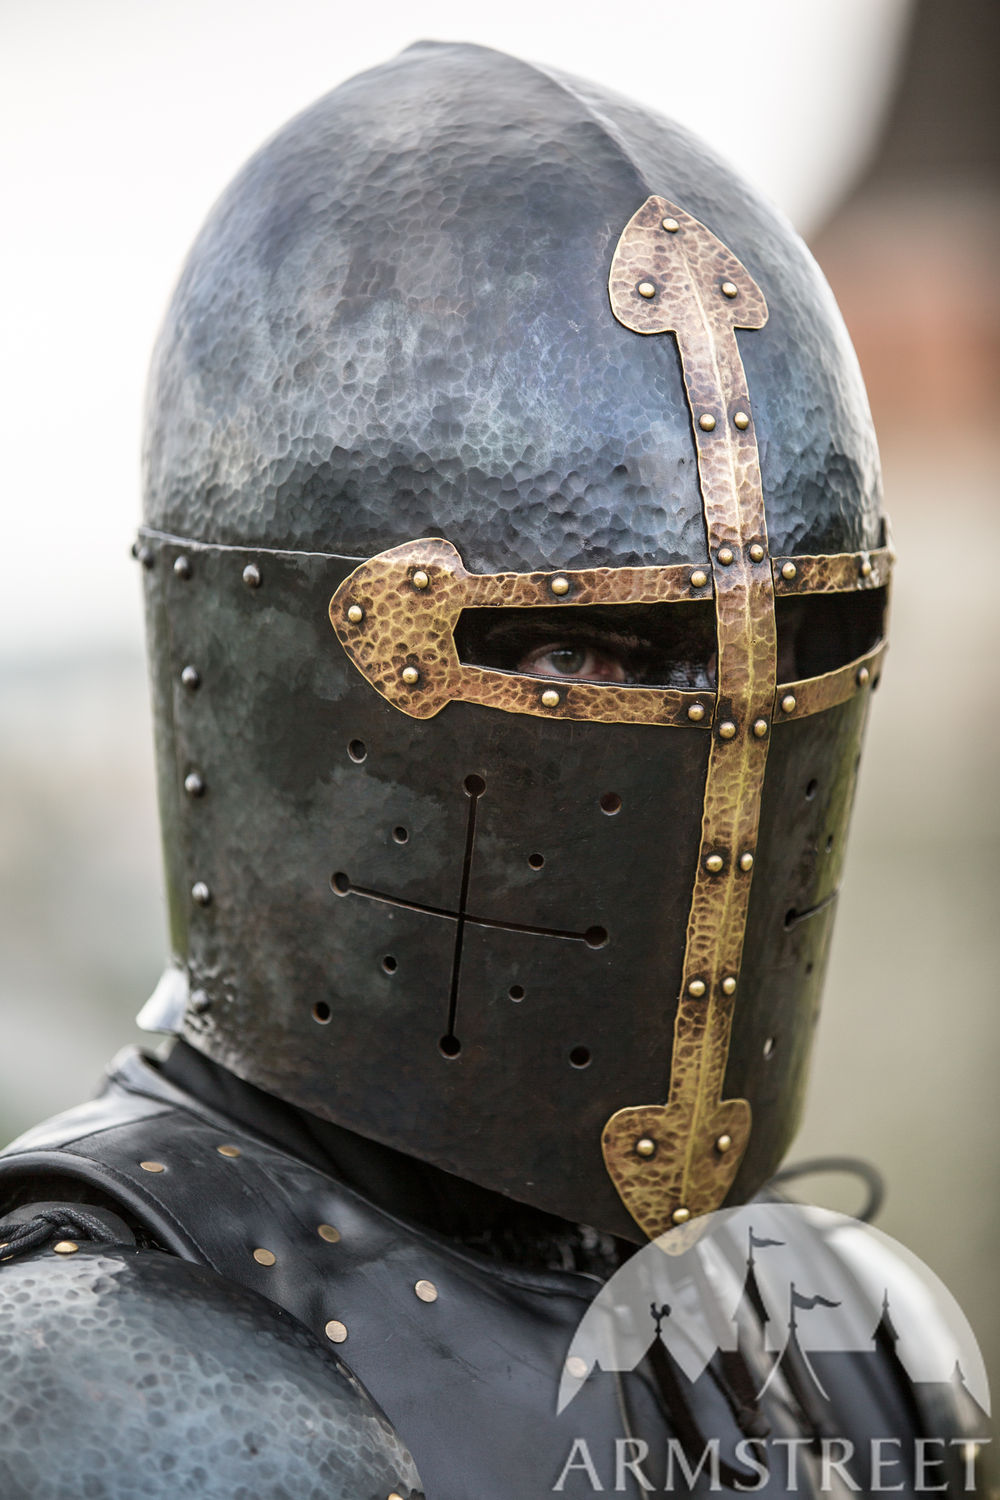 Blackened Sugarloaf Helmet “The Wayward Knight”